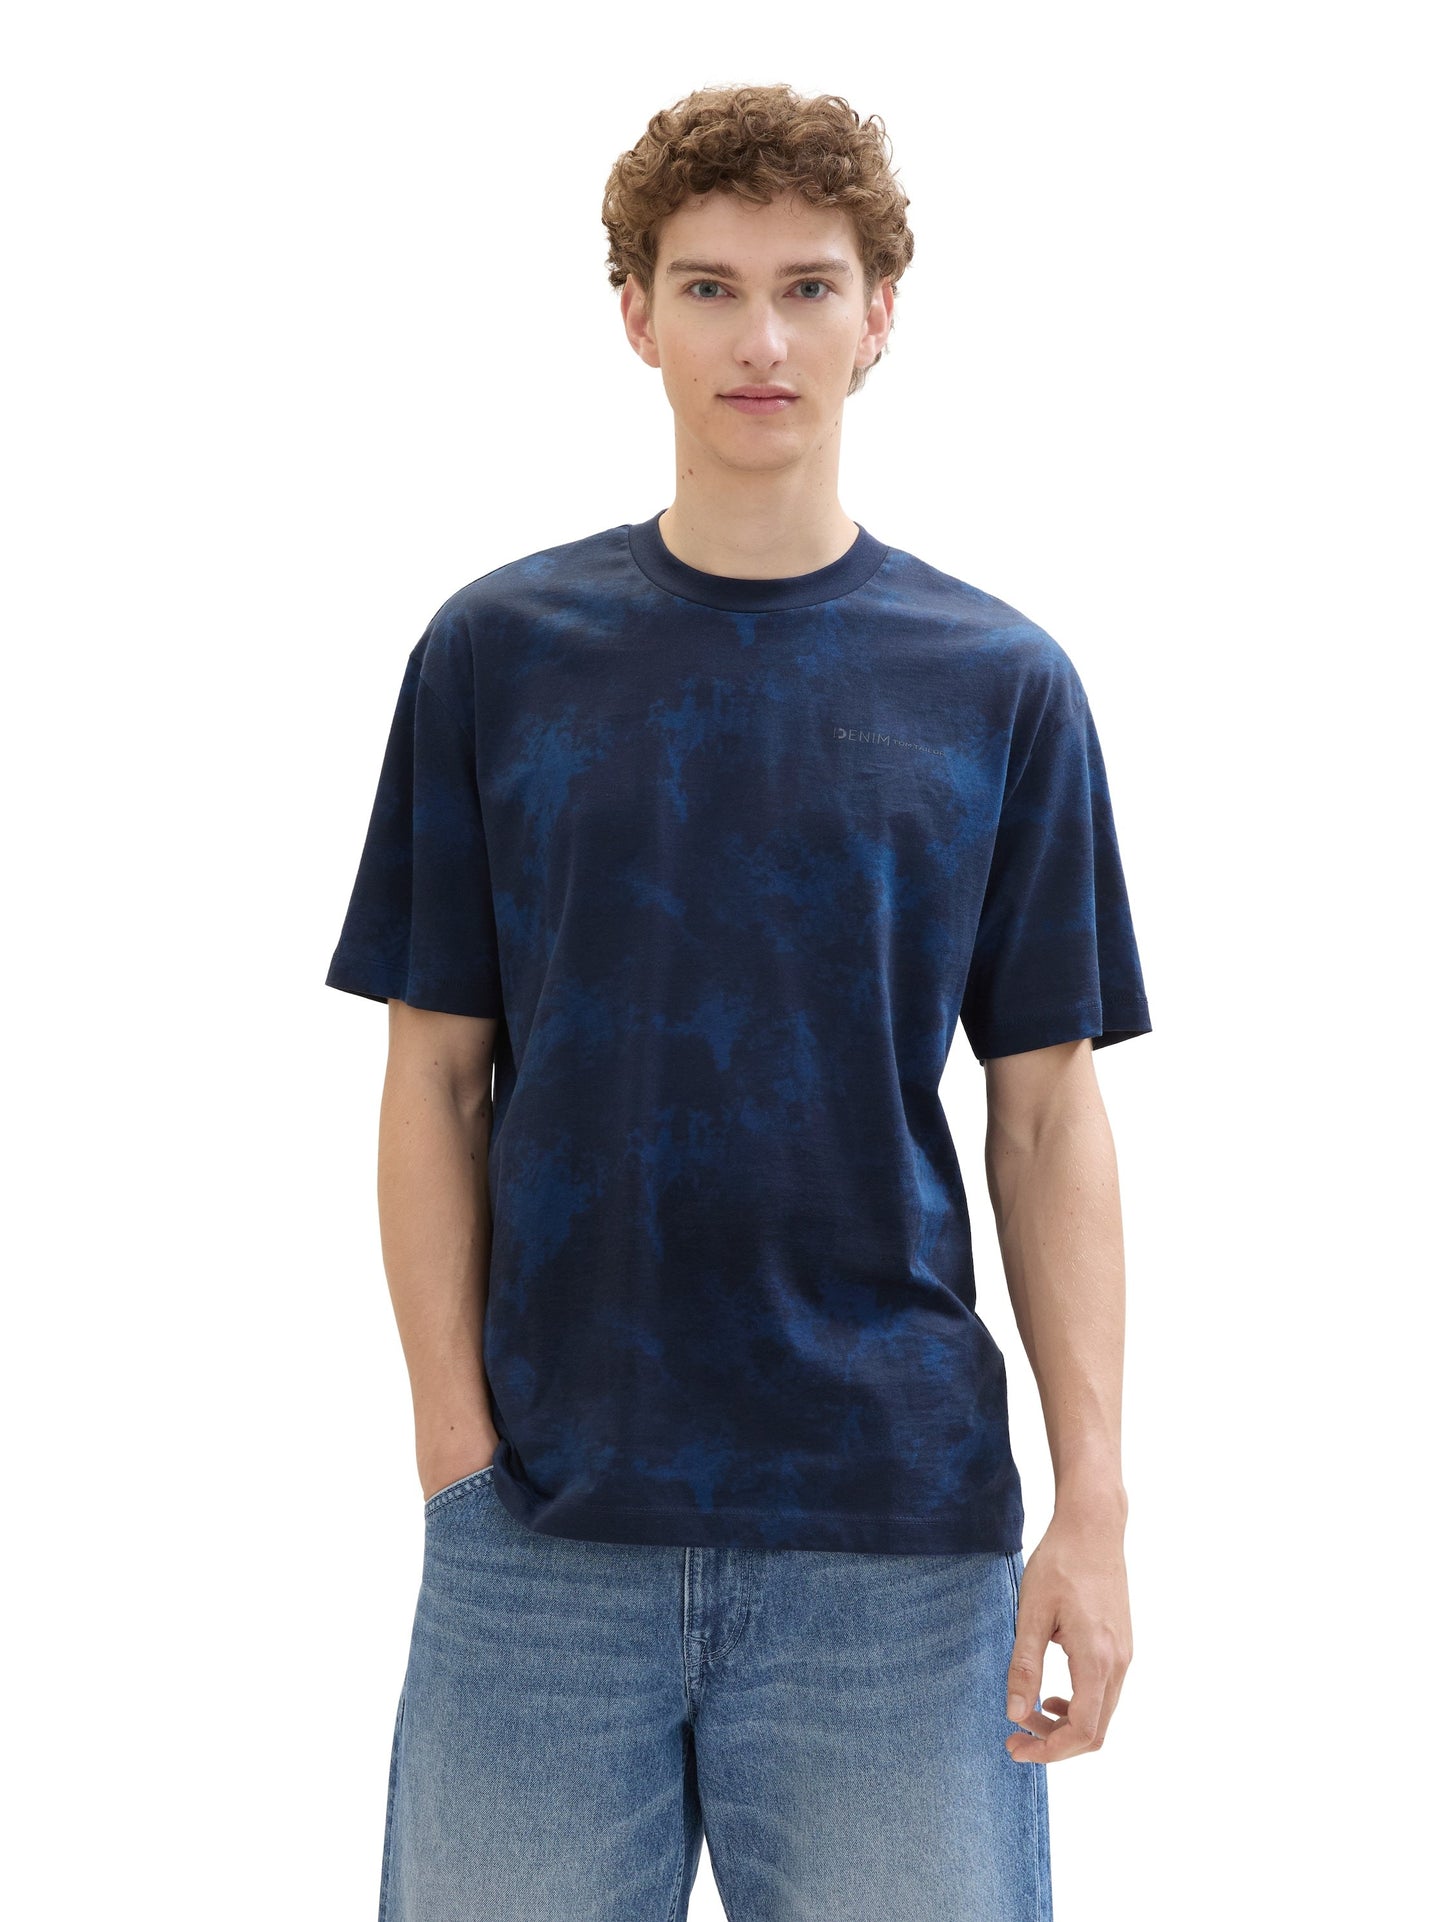 T-Shirt mit Allover Print (Navy Smoky Pri)